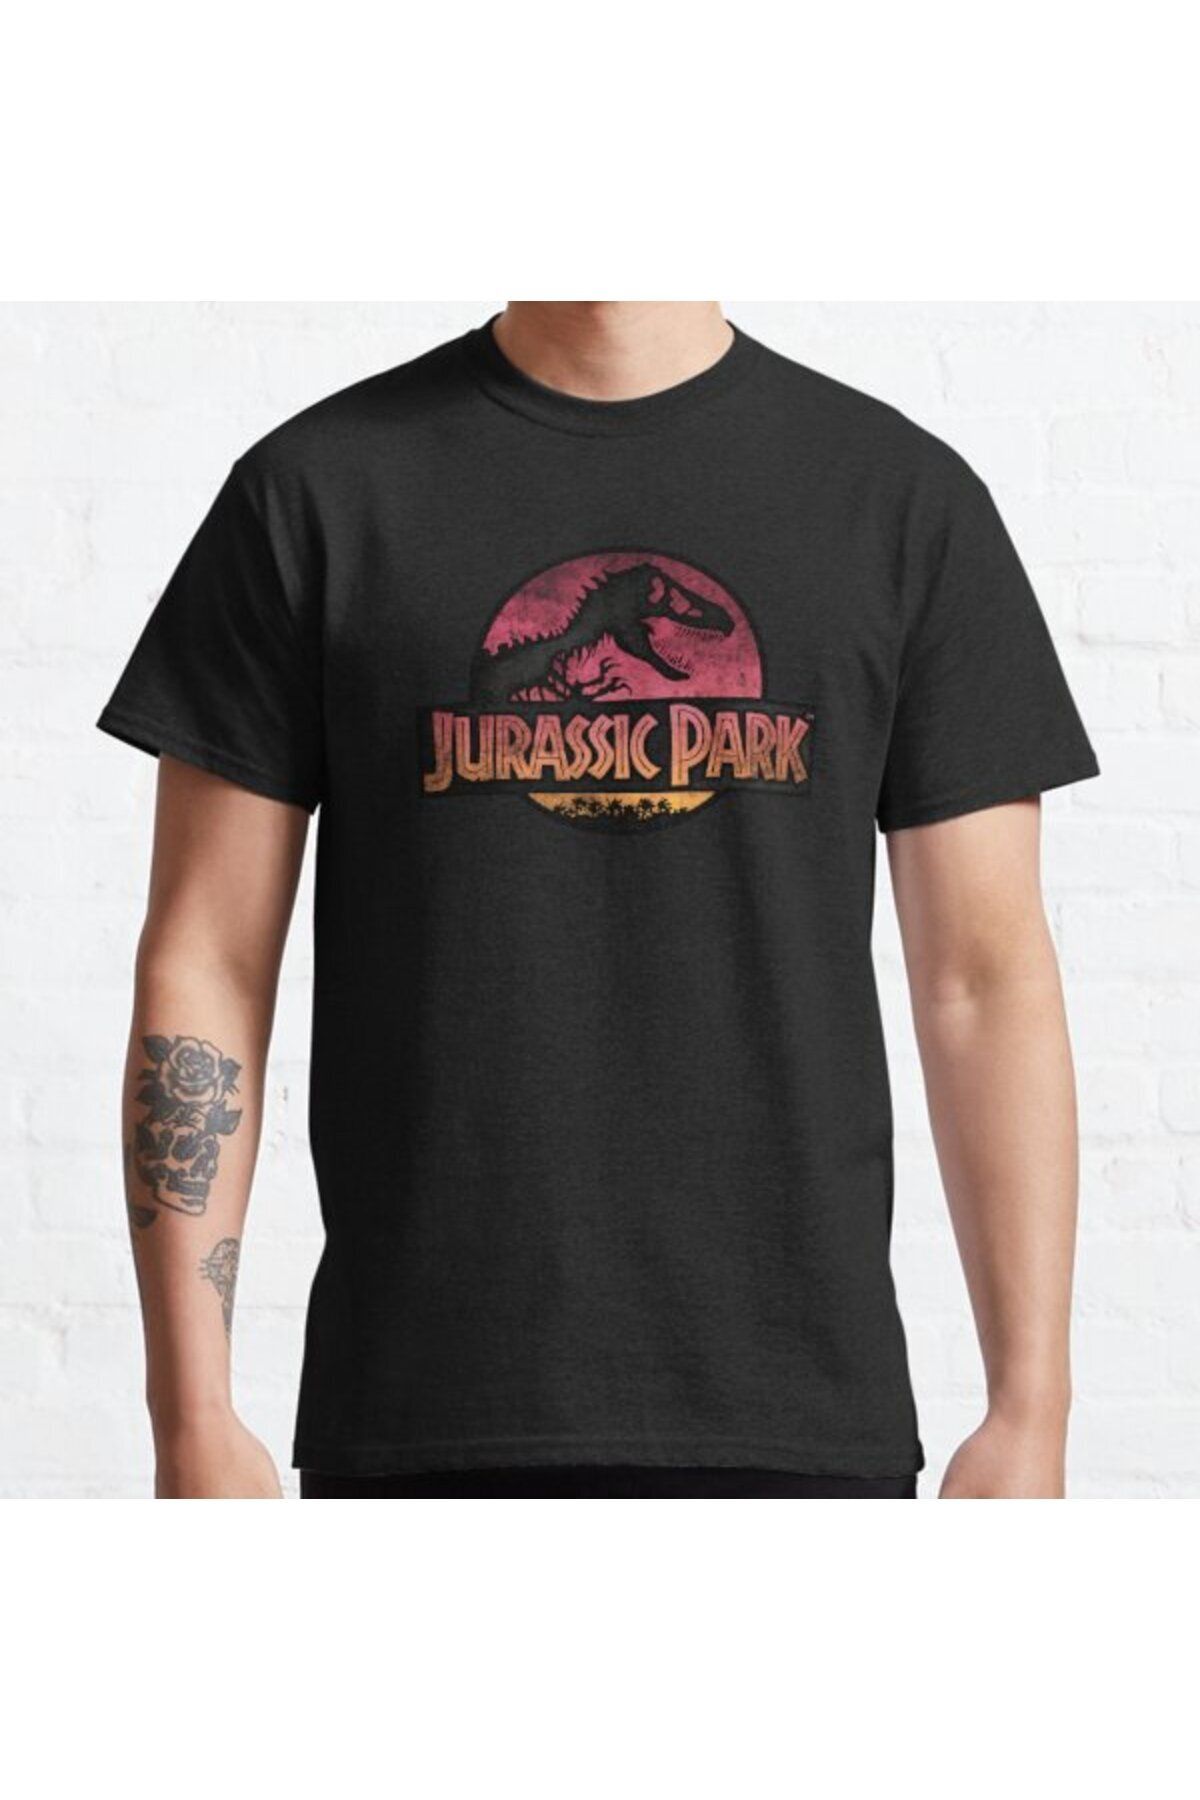 ZOKAWEAR Bol Kalıp Unisex Jurassic Park Pink Pastel Distressed Classic Movie Logo Tasarım Baskılı Tshirt